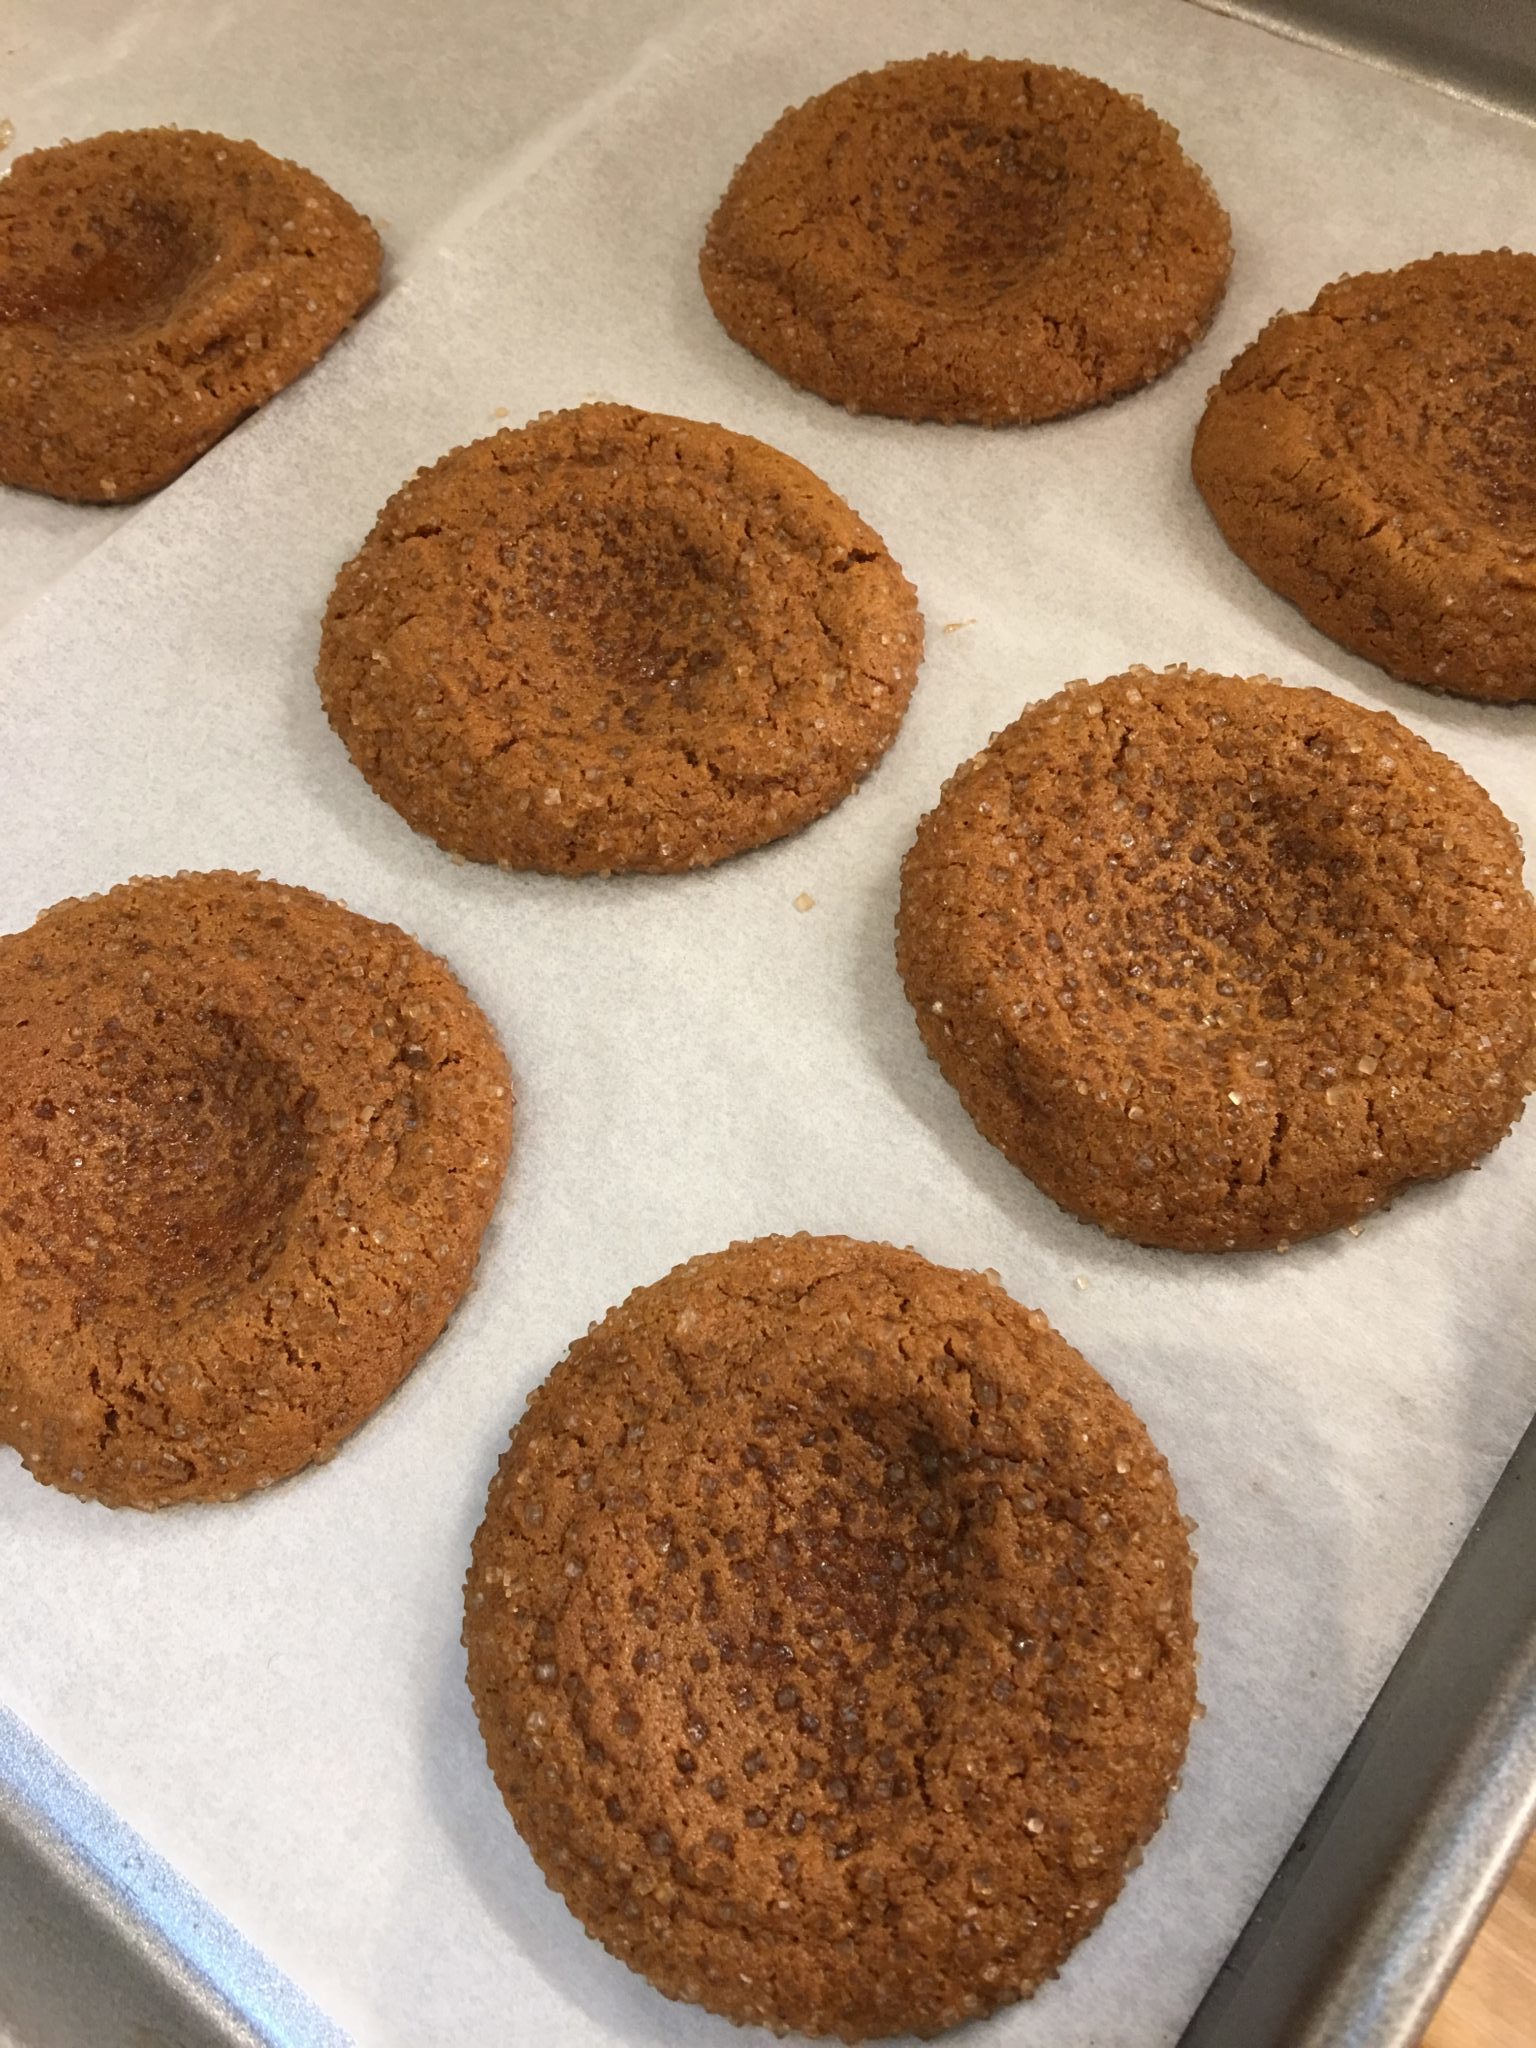 Thumbprint cookies cooling